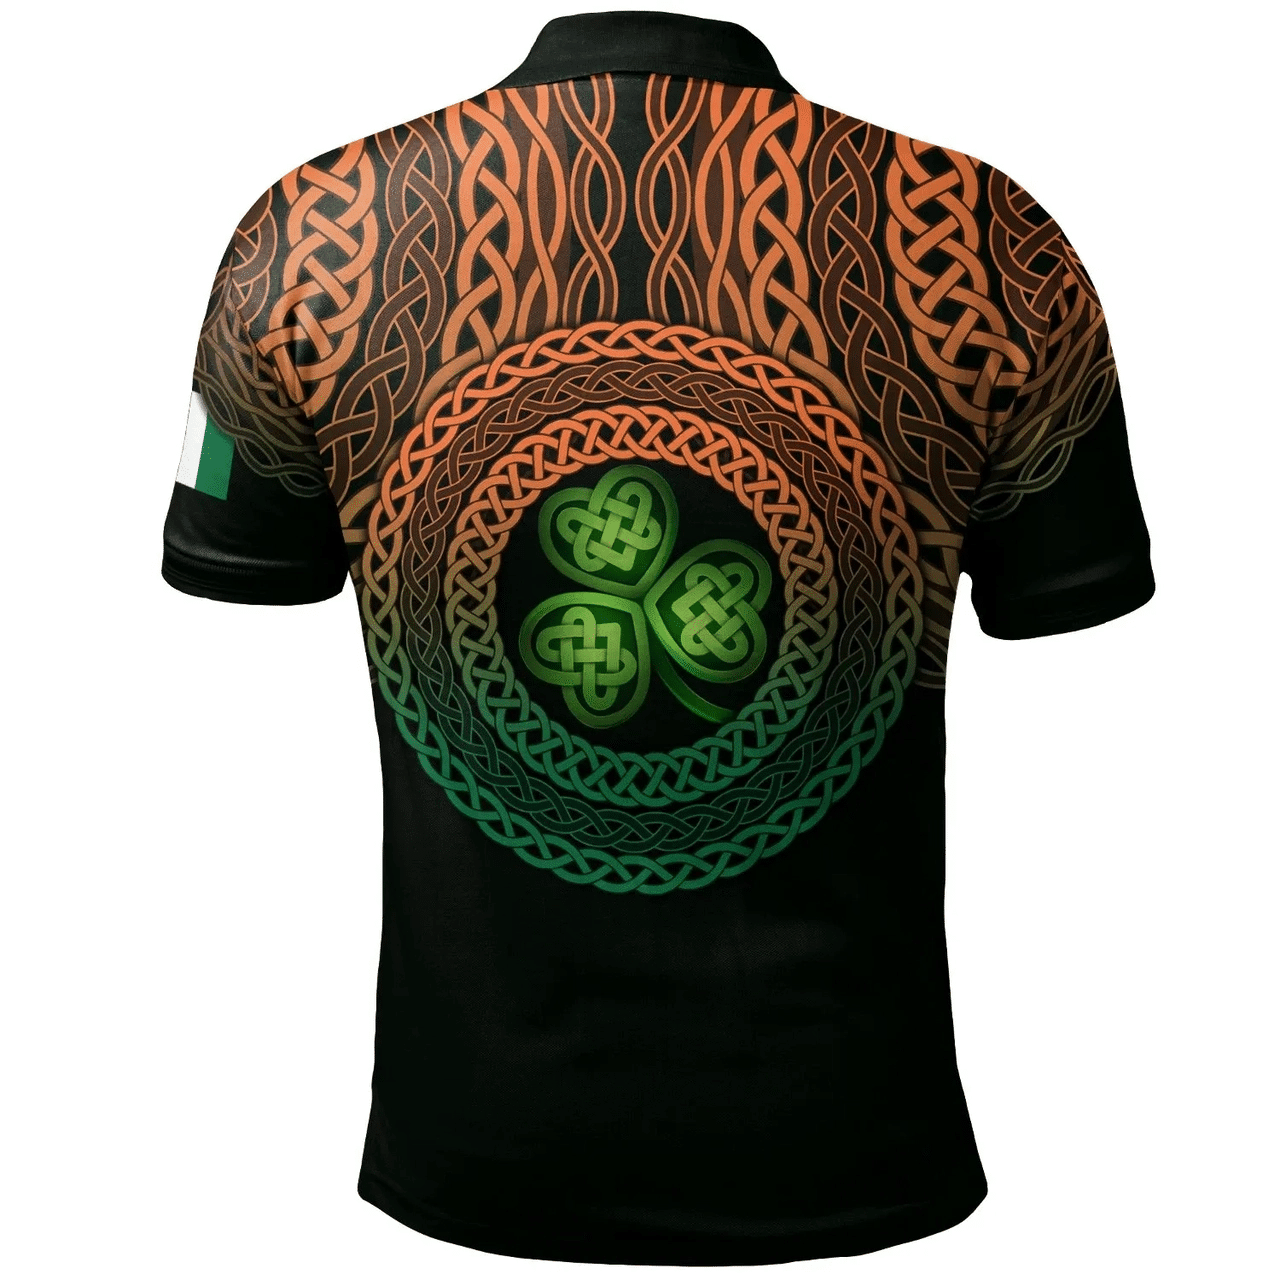 1stIreland Ireland Polo Shirt - Hanraghan or O'Hanraghan Irish Family Crest Polo Shirt - Celtic Pride A7 | 1stIreland.com